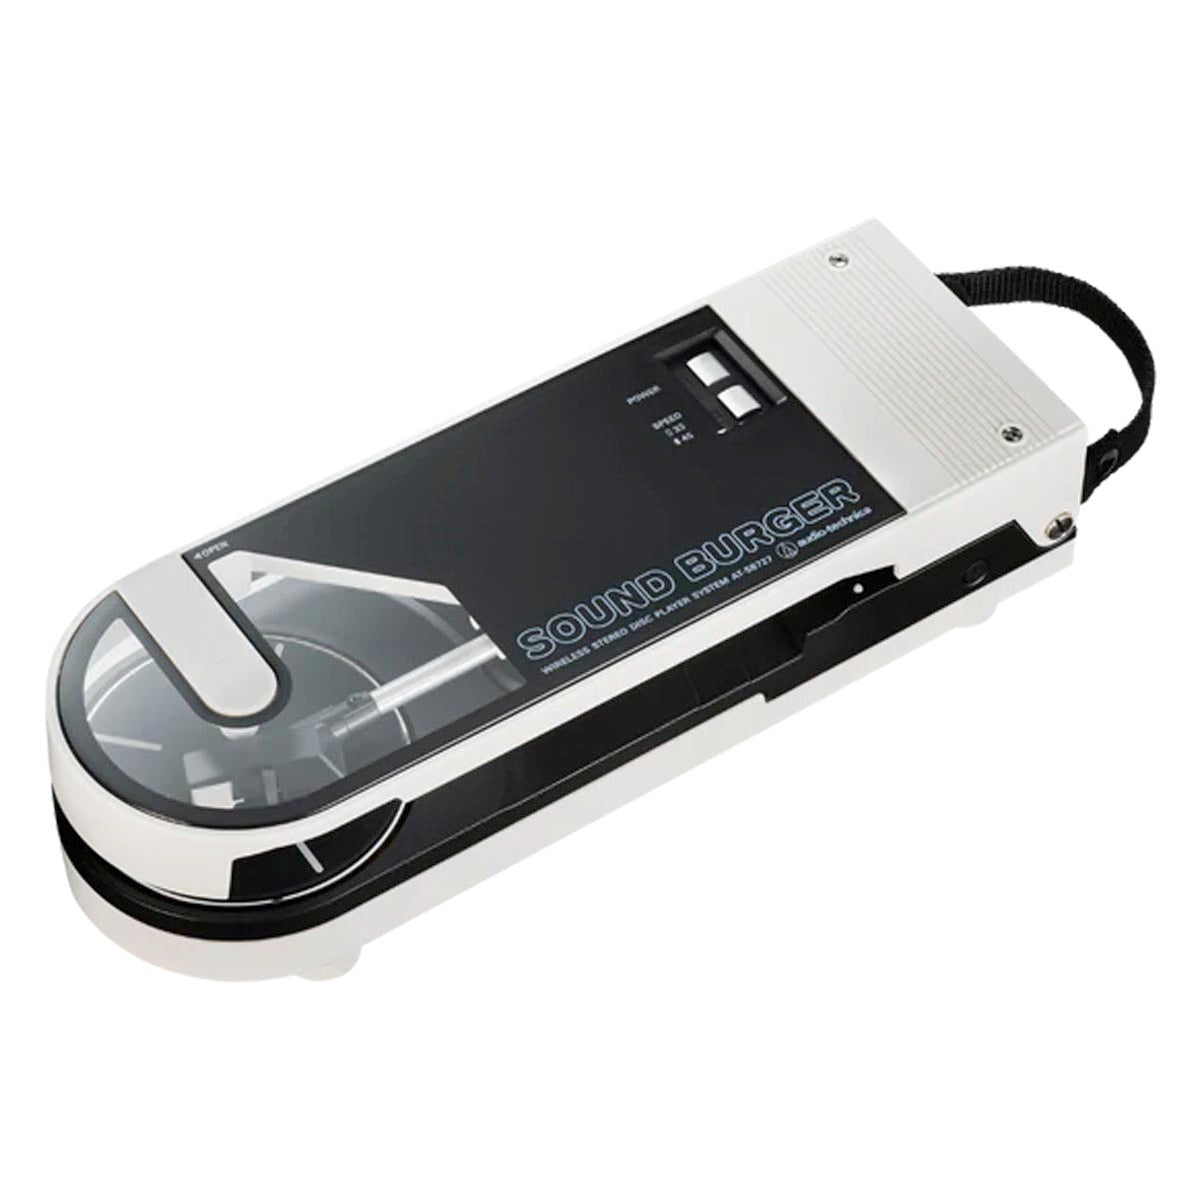 Audio Technica SB727 SOUND BURGER Portable Bluetooth Turntable - White